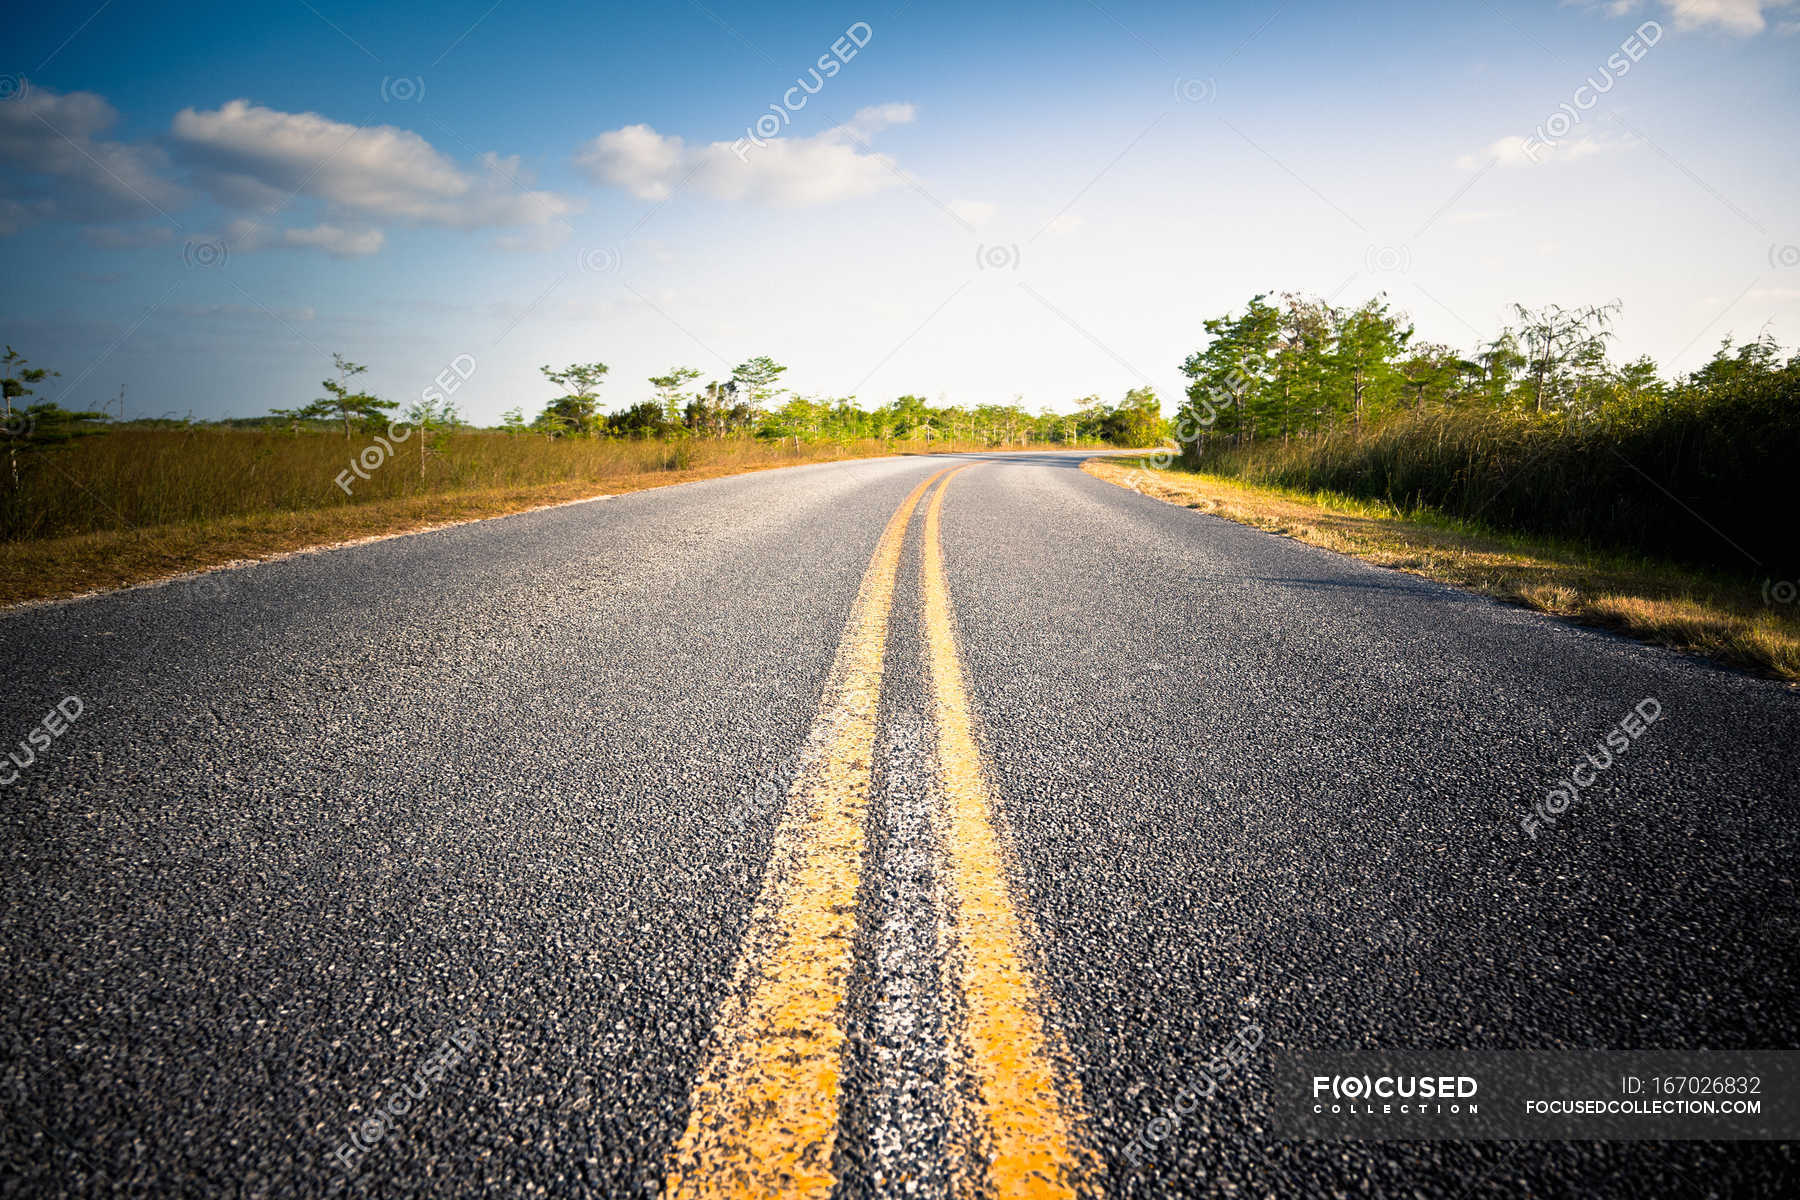 Double yellow line on winding road — Stock Photo | #167026832